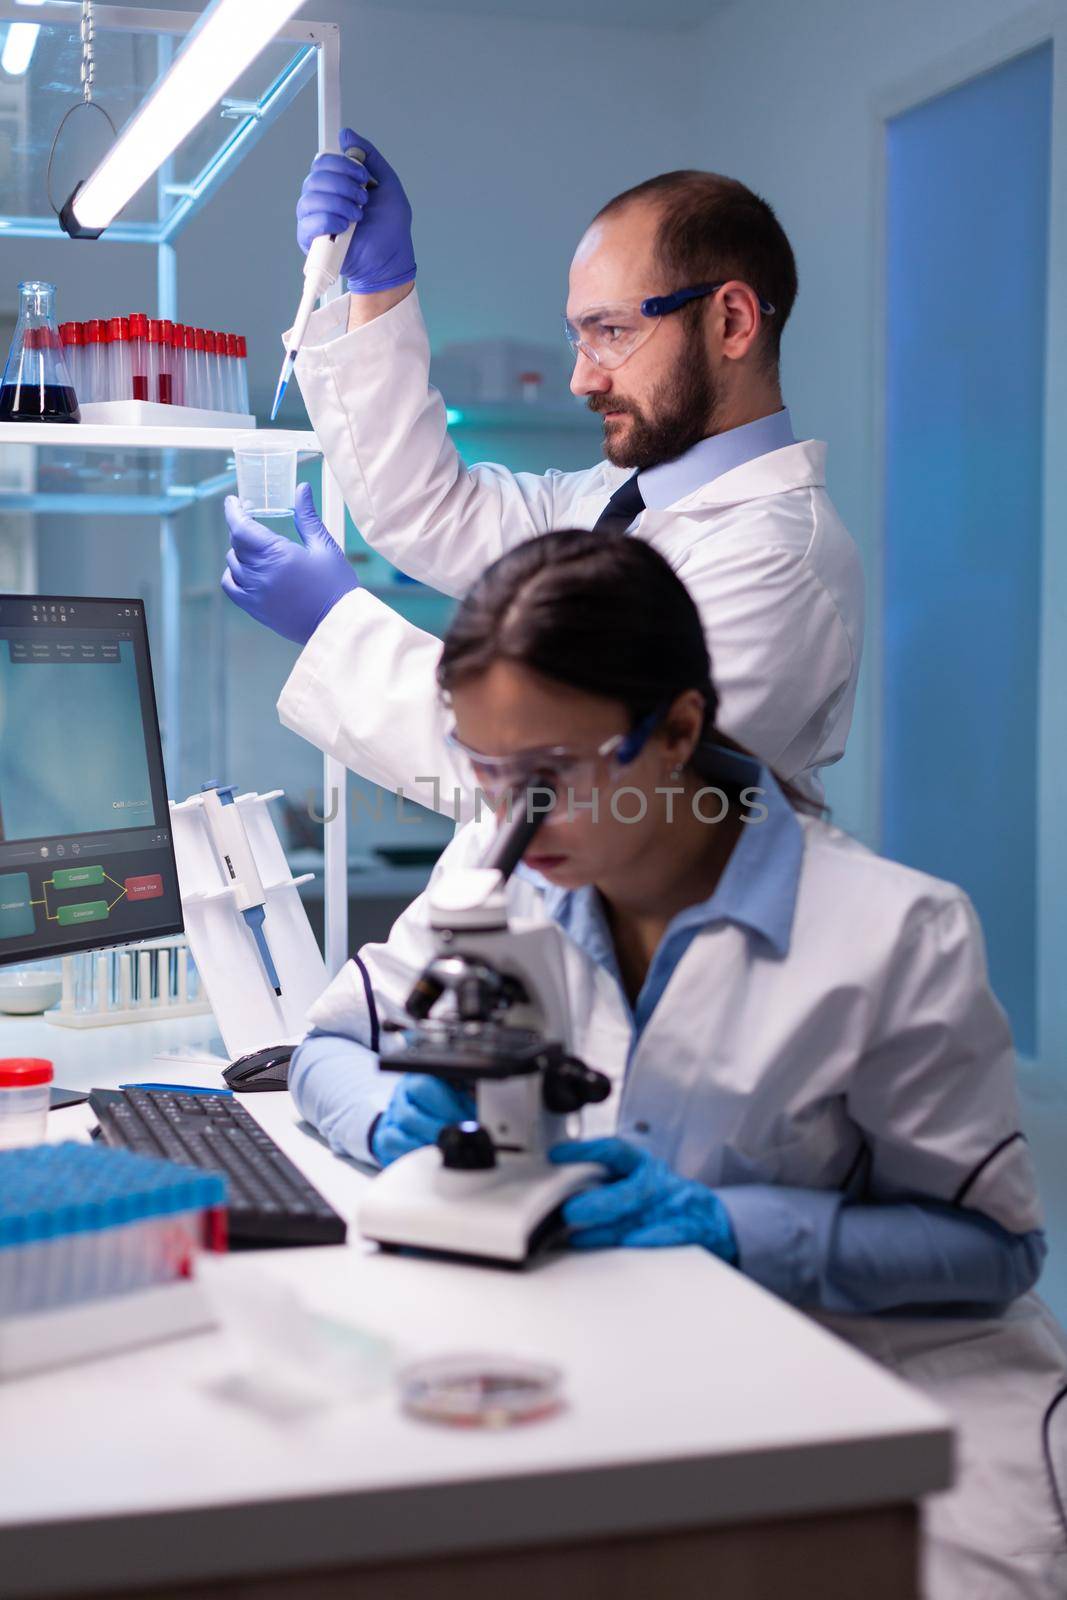 Scientist examining blood sample looking under microscope by DCStudio